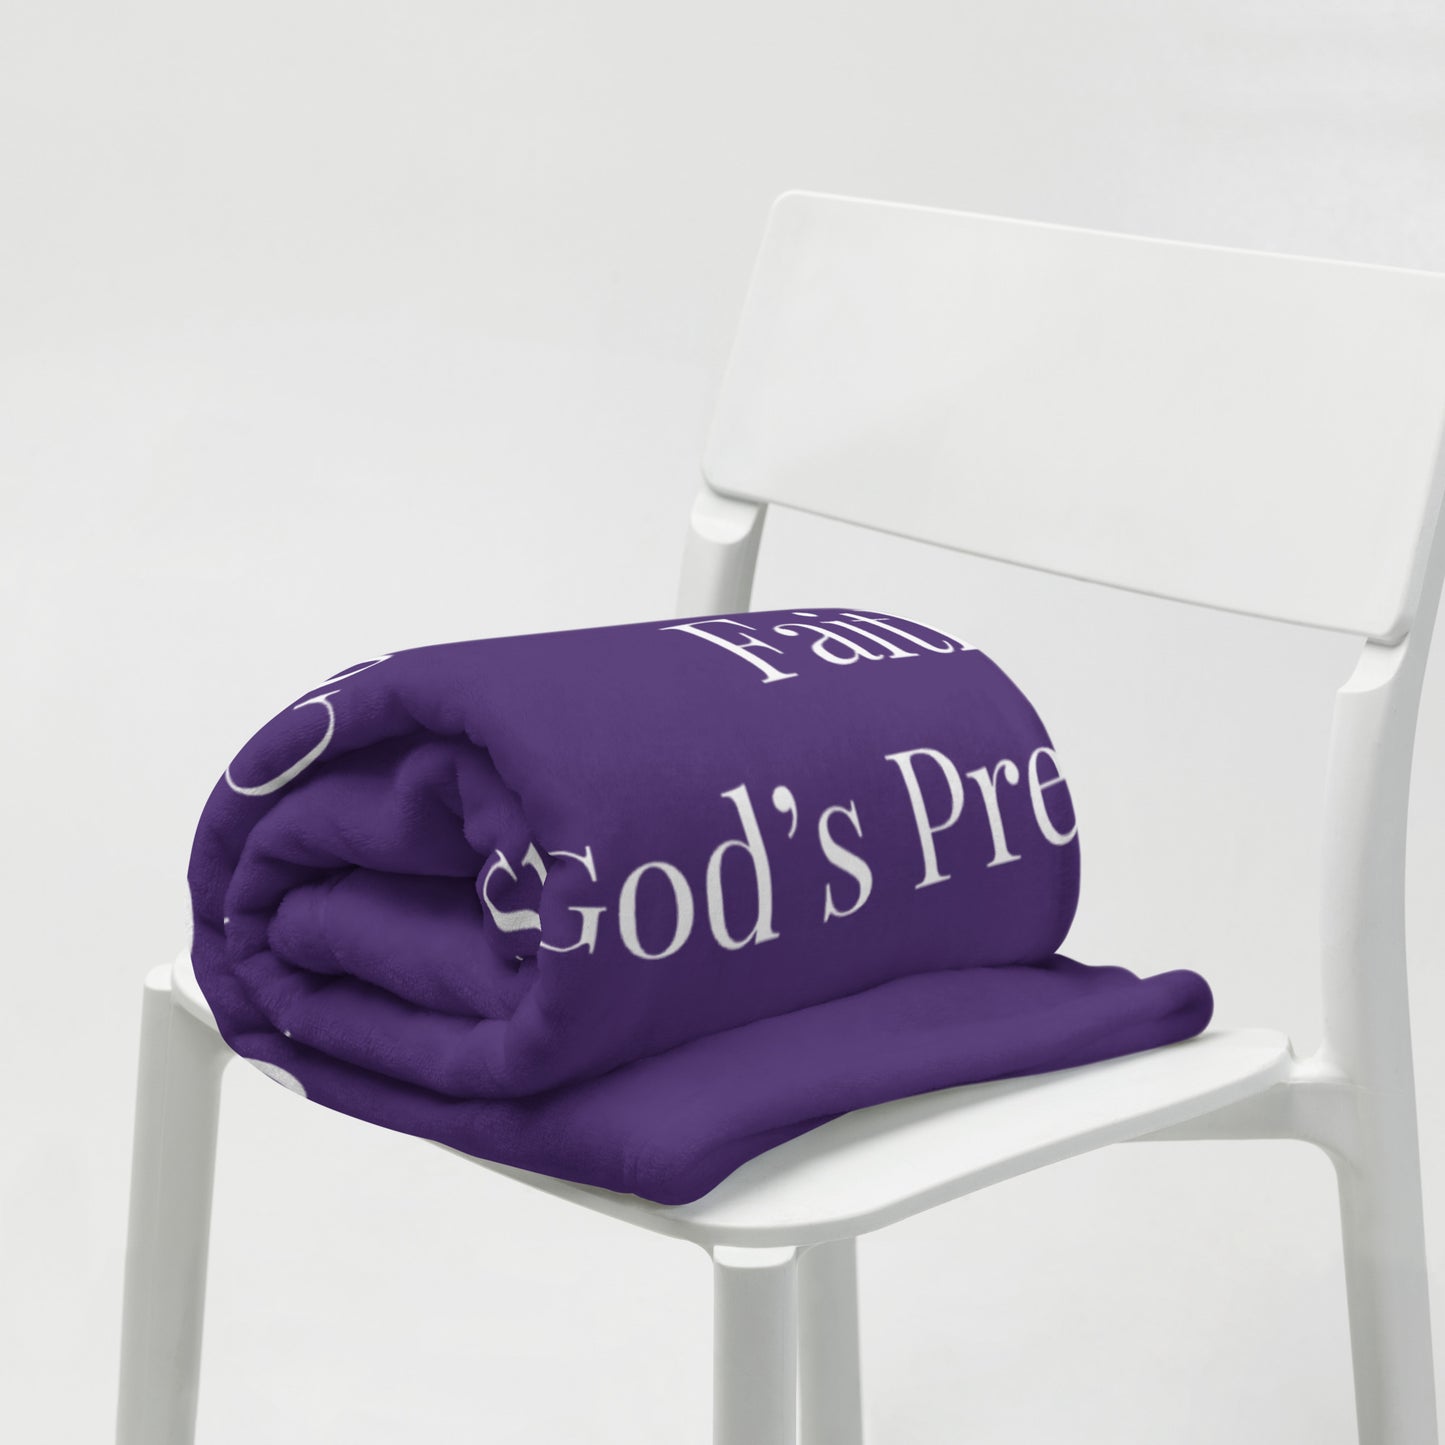 Prayer collection inspirational throw blanket - Purple/White